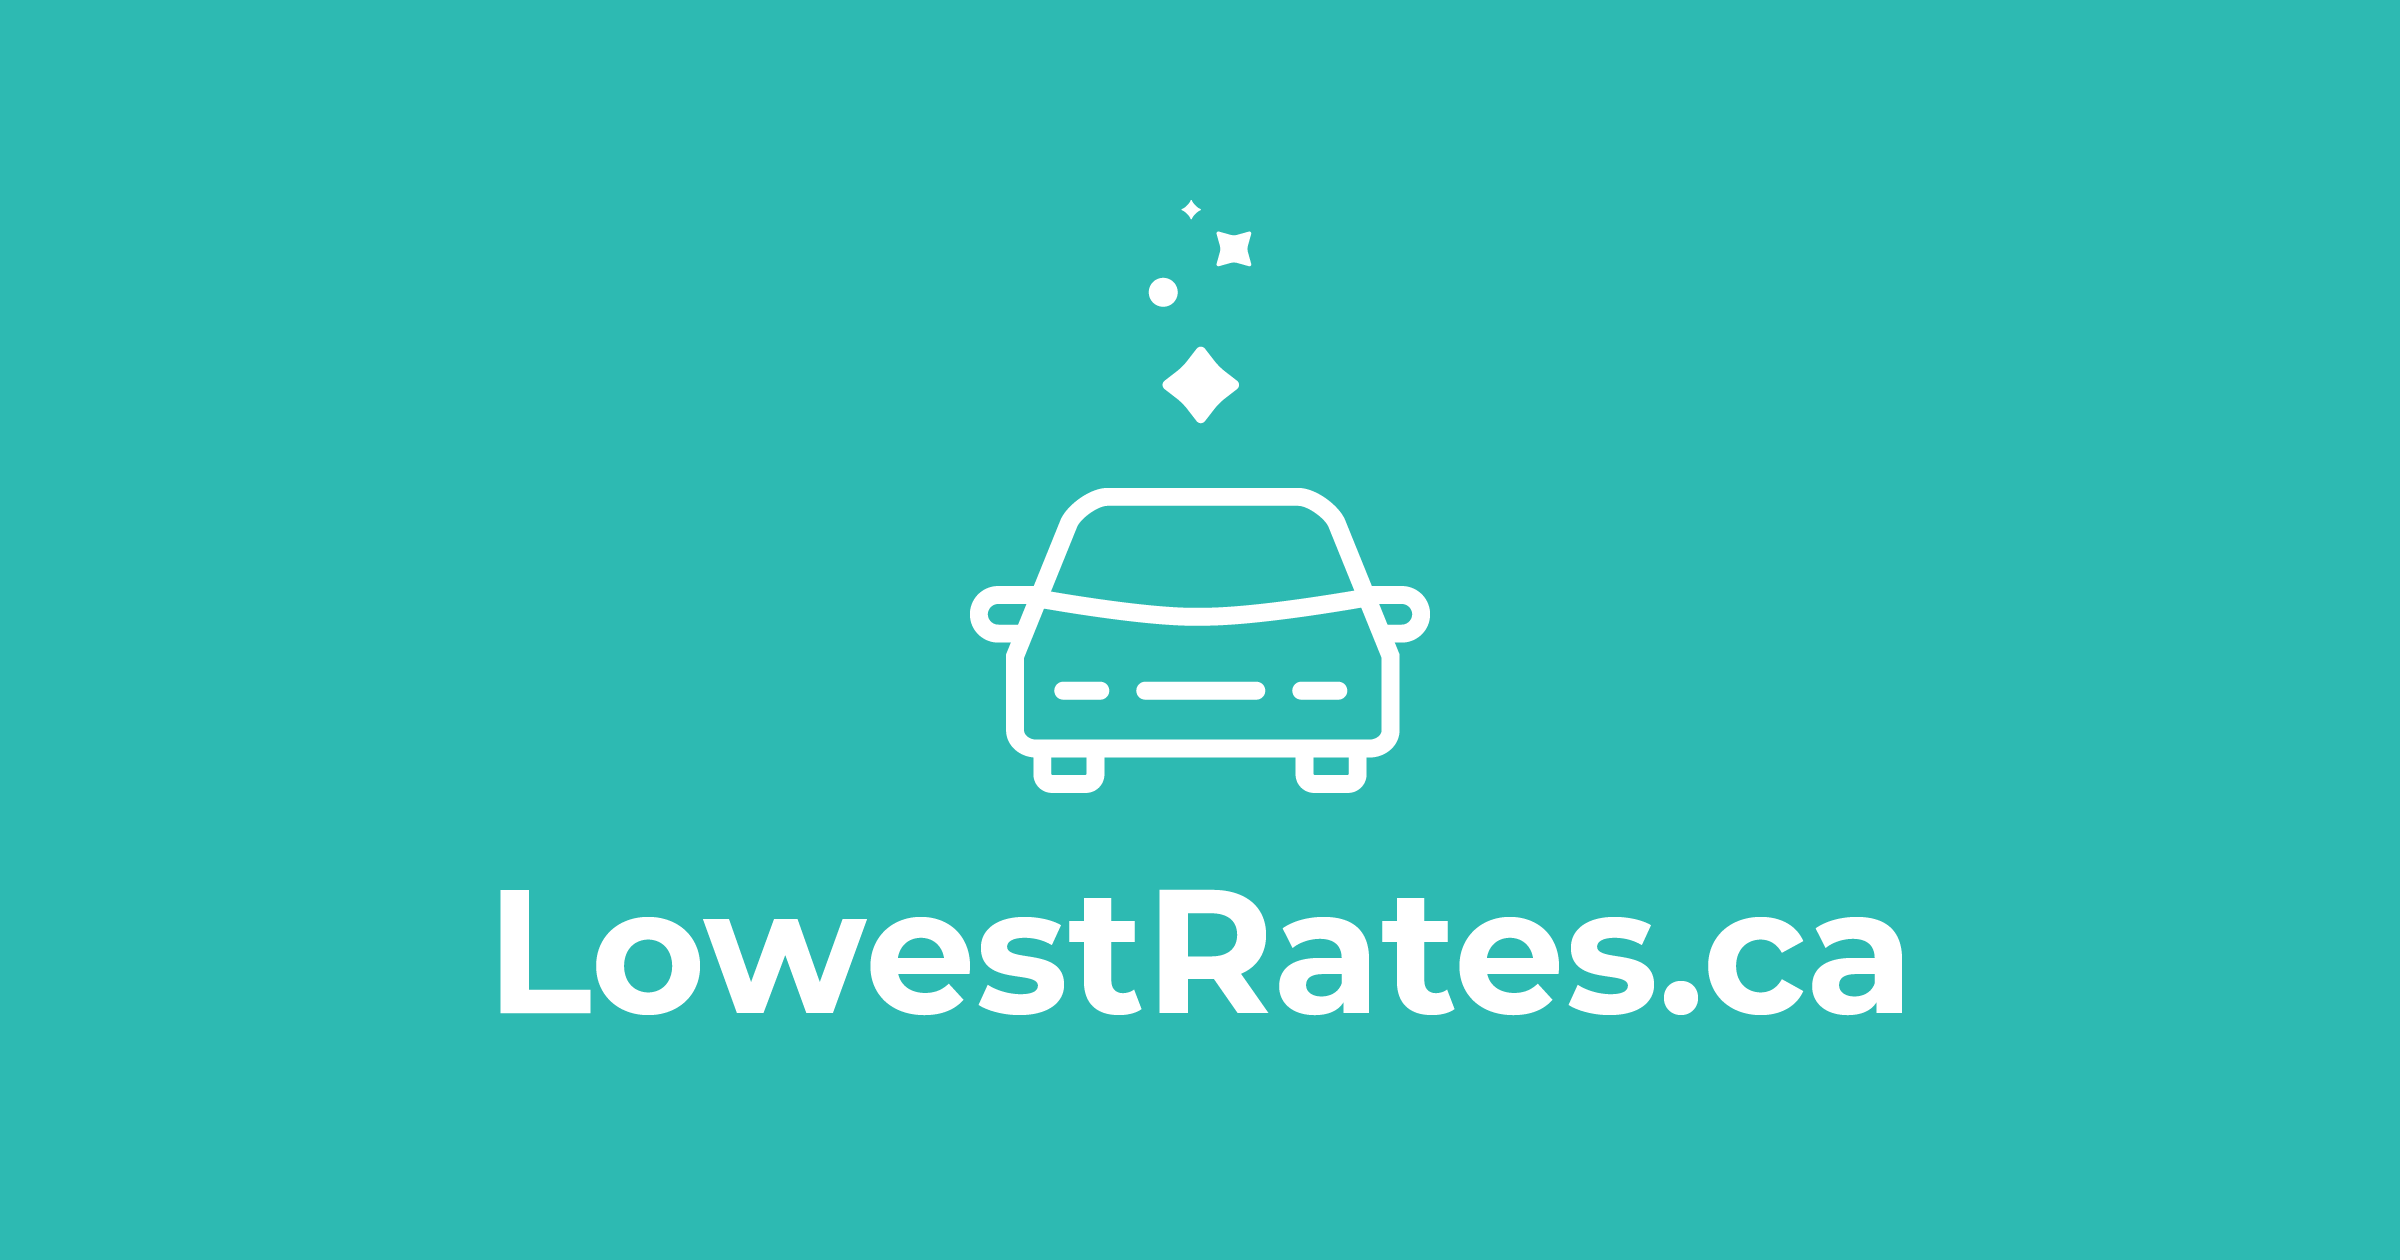 Auto Insurance Compare Quotes in Toronto LowestRates.ca